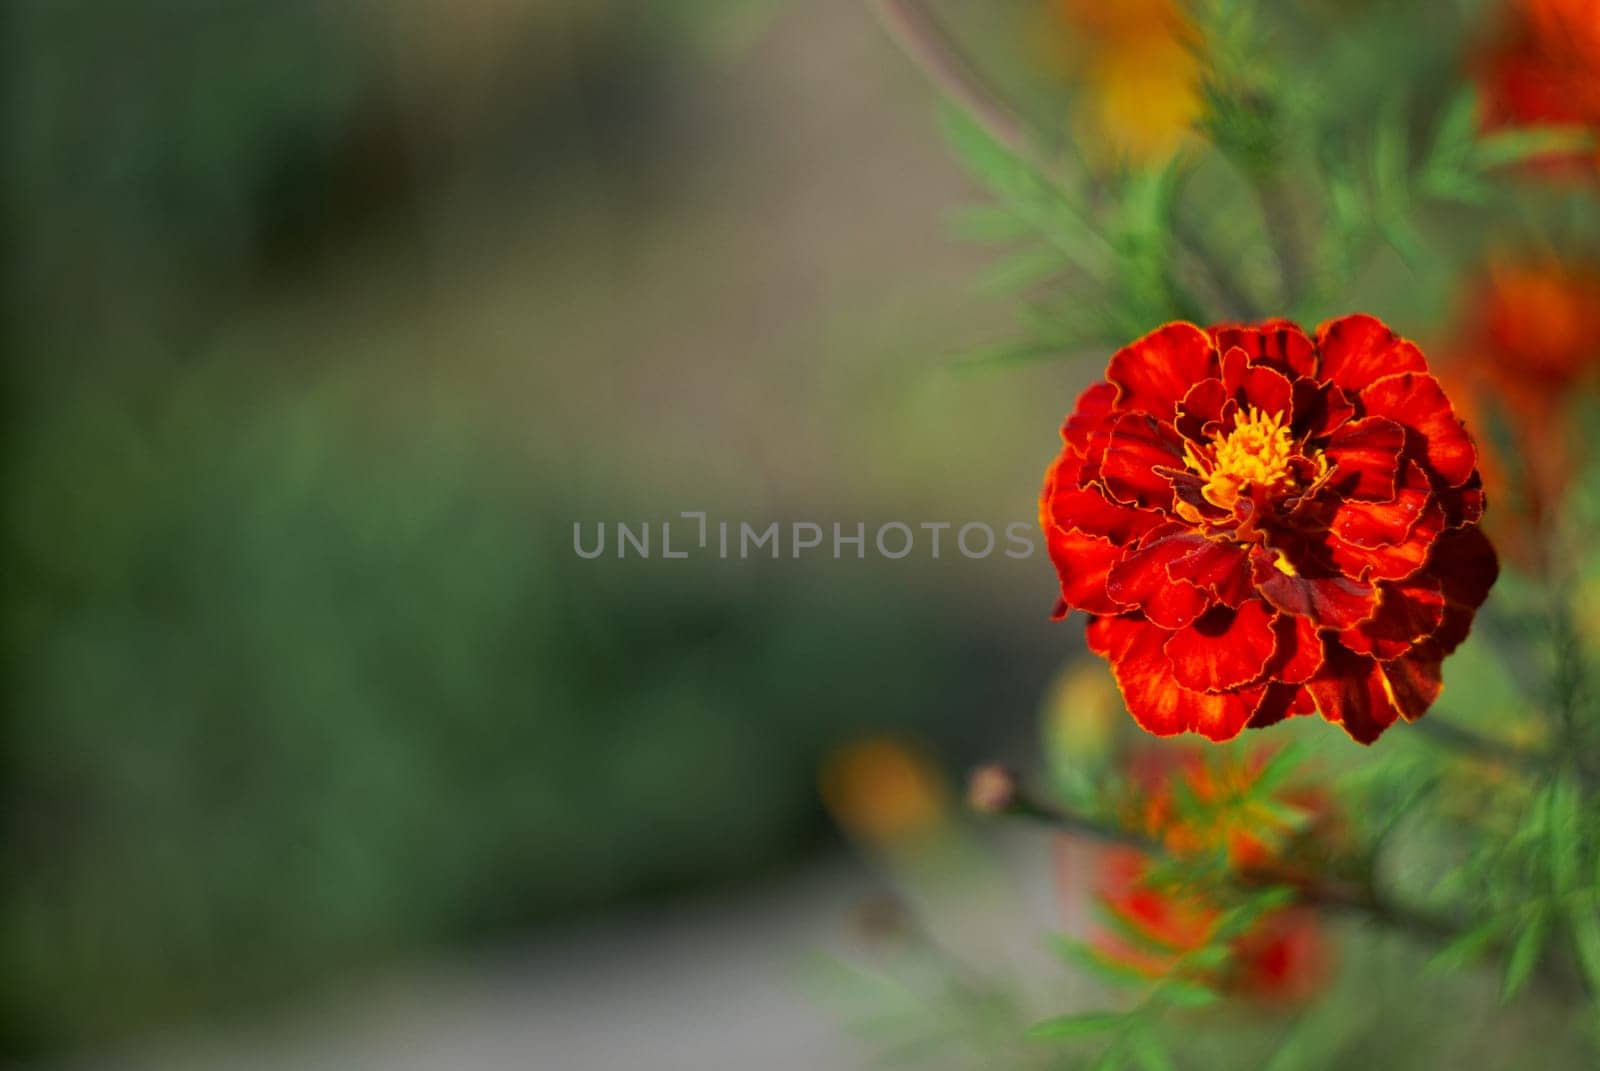 one red calendula flower on a blurred background. High quality photo